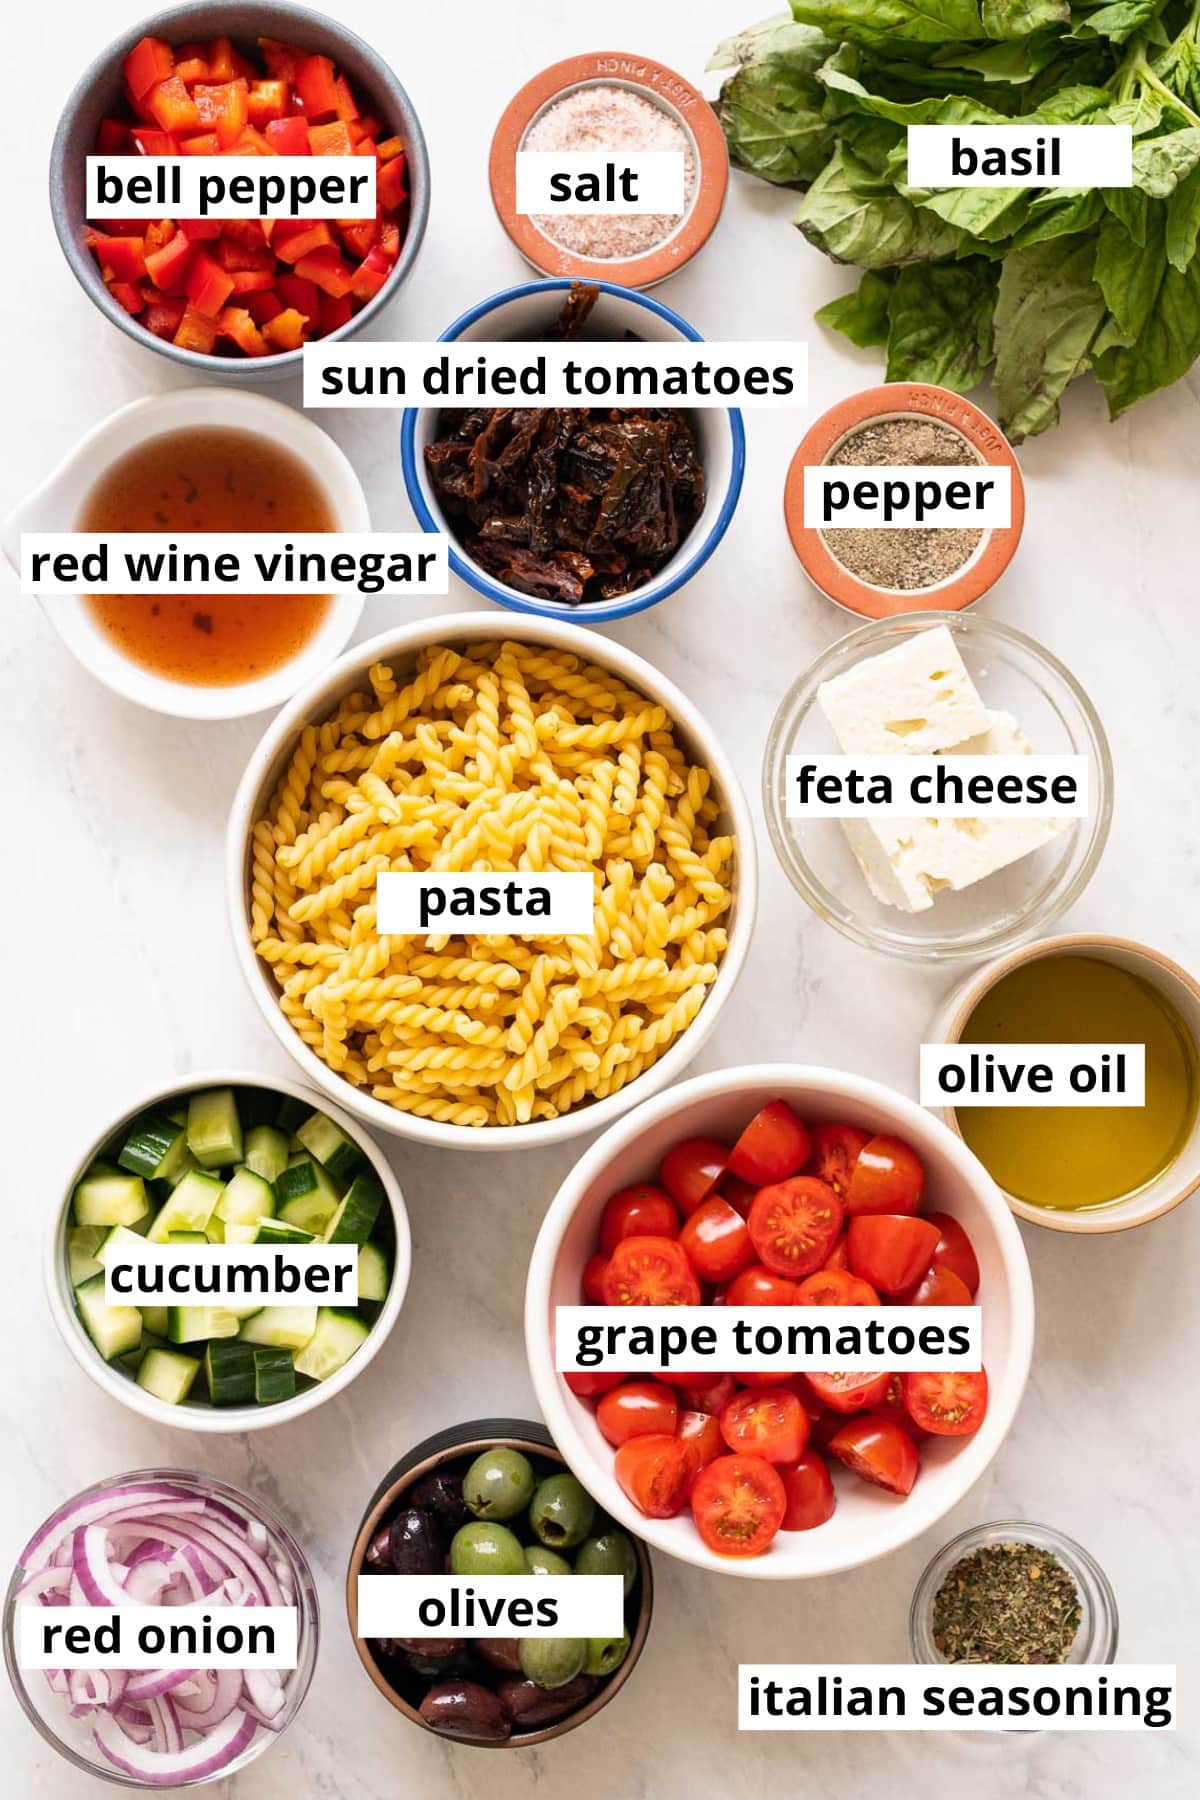 Pasta, sun-dried tomatoes, bell pepper, basil, grape tomatoes, cucumber, red onion, olives, Italian seasoning, olive oil, feta, vinegar, salt and pepper.